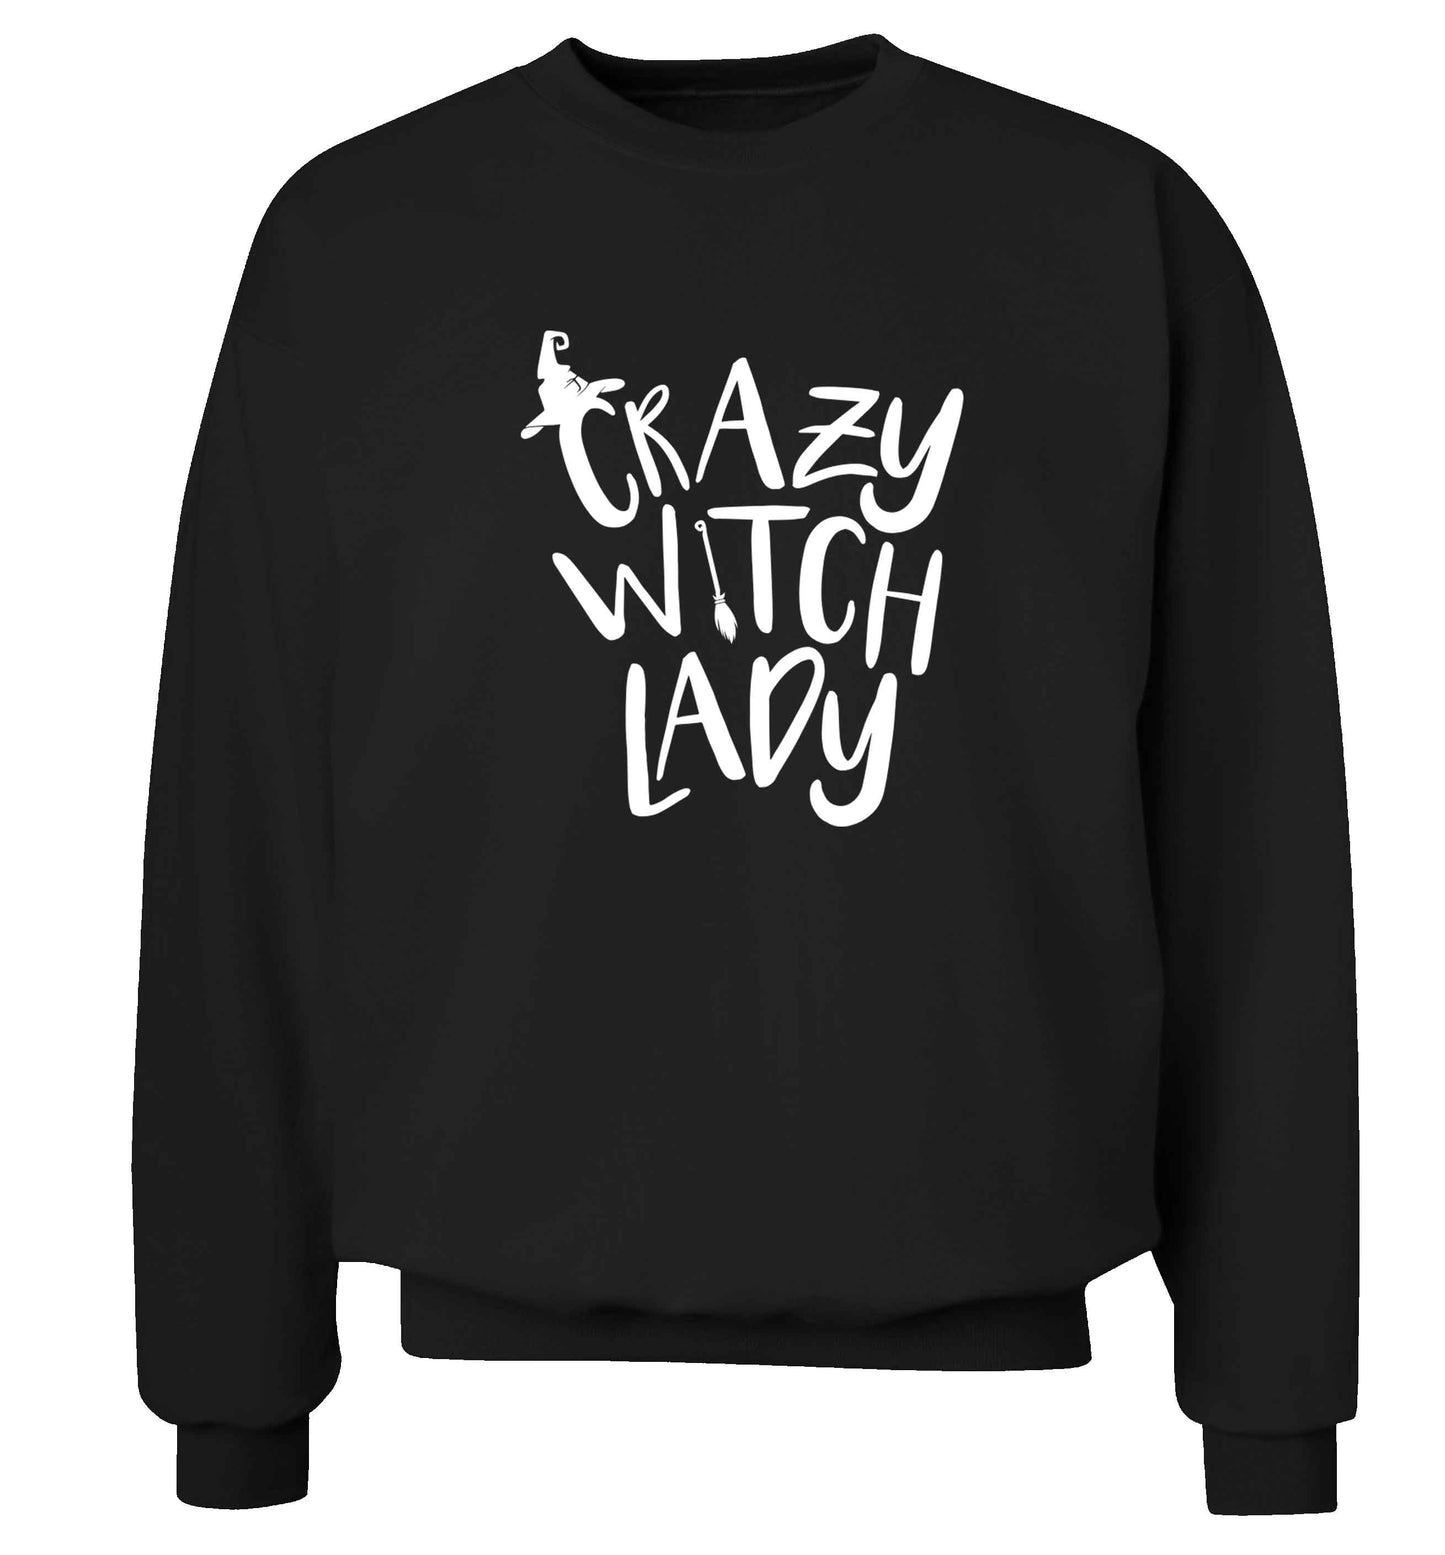 Crazy witch lady adult's unisex black sweater 2XL